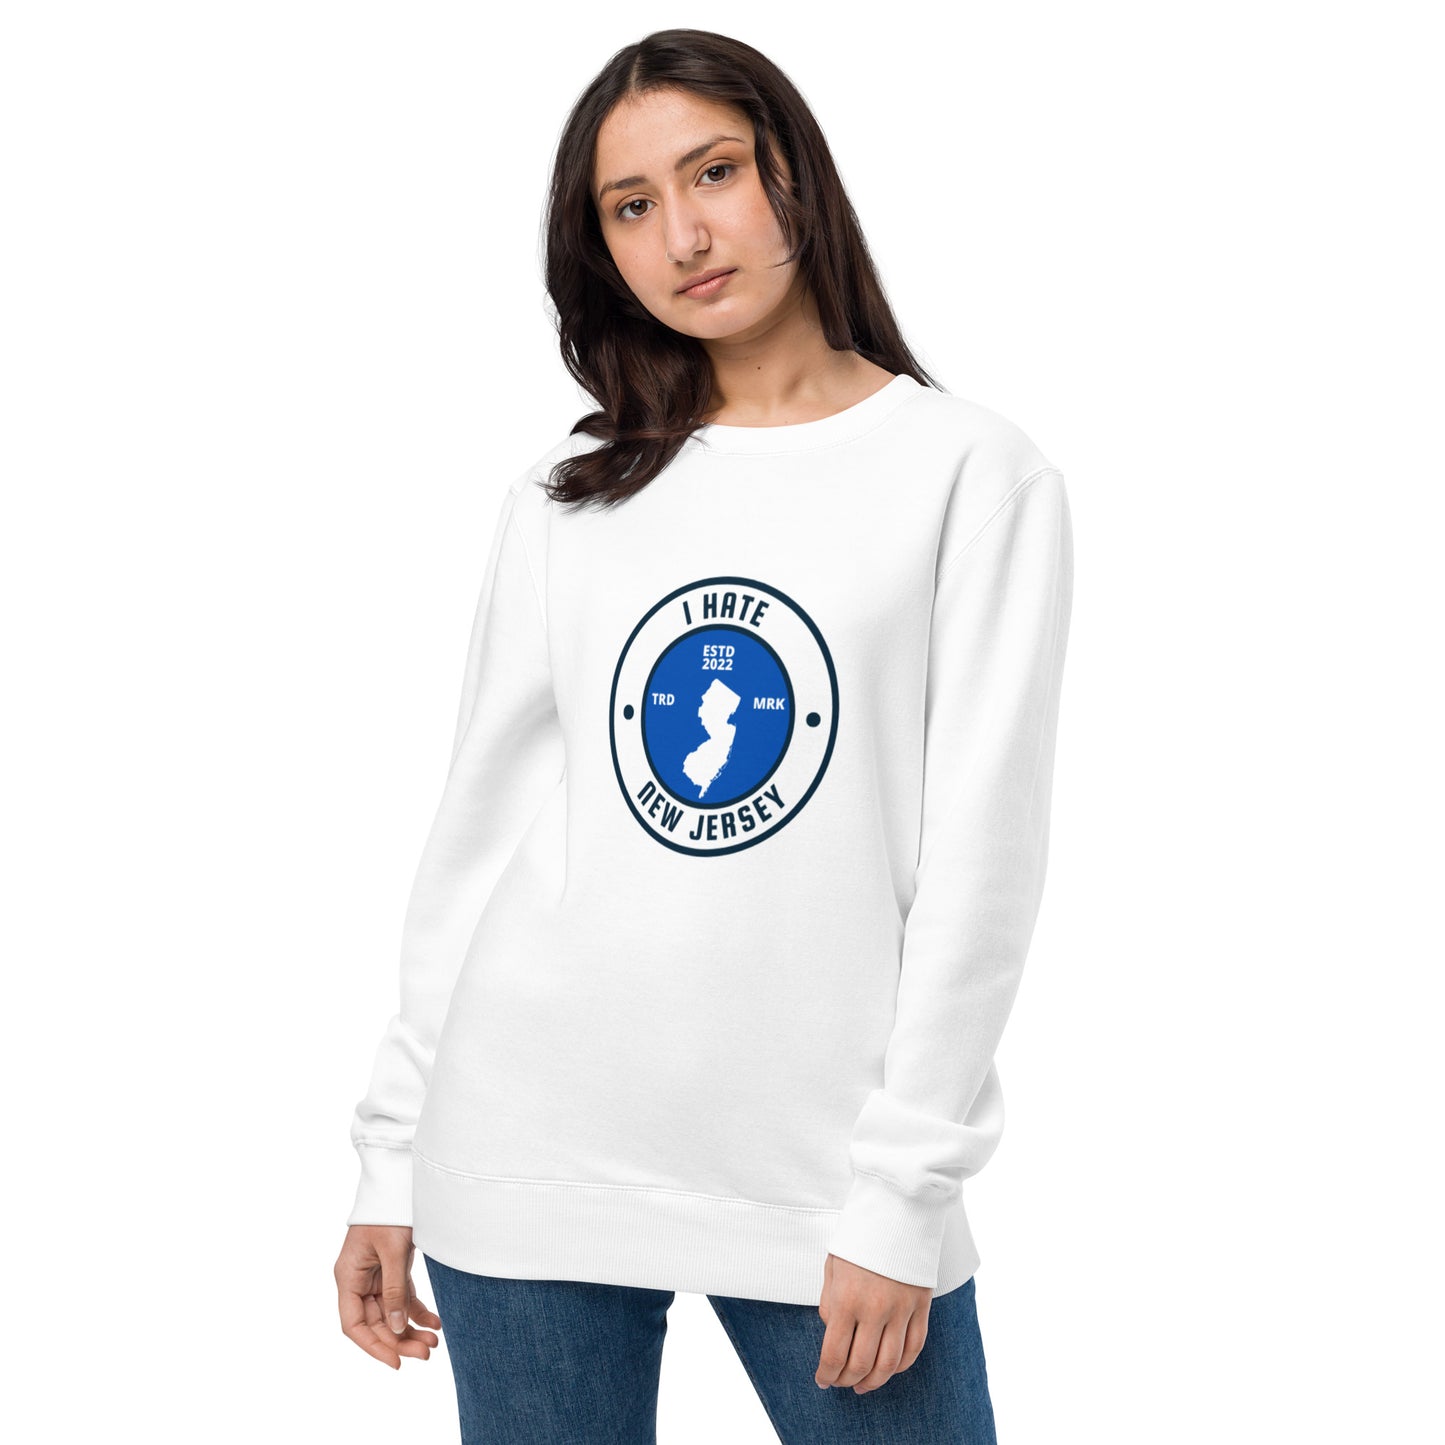 Unisex fashion sweatshirt